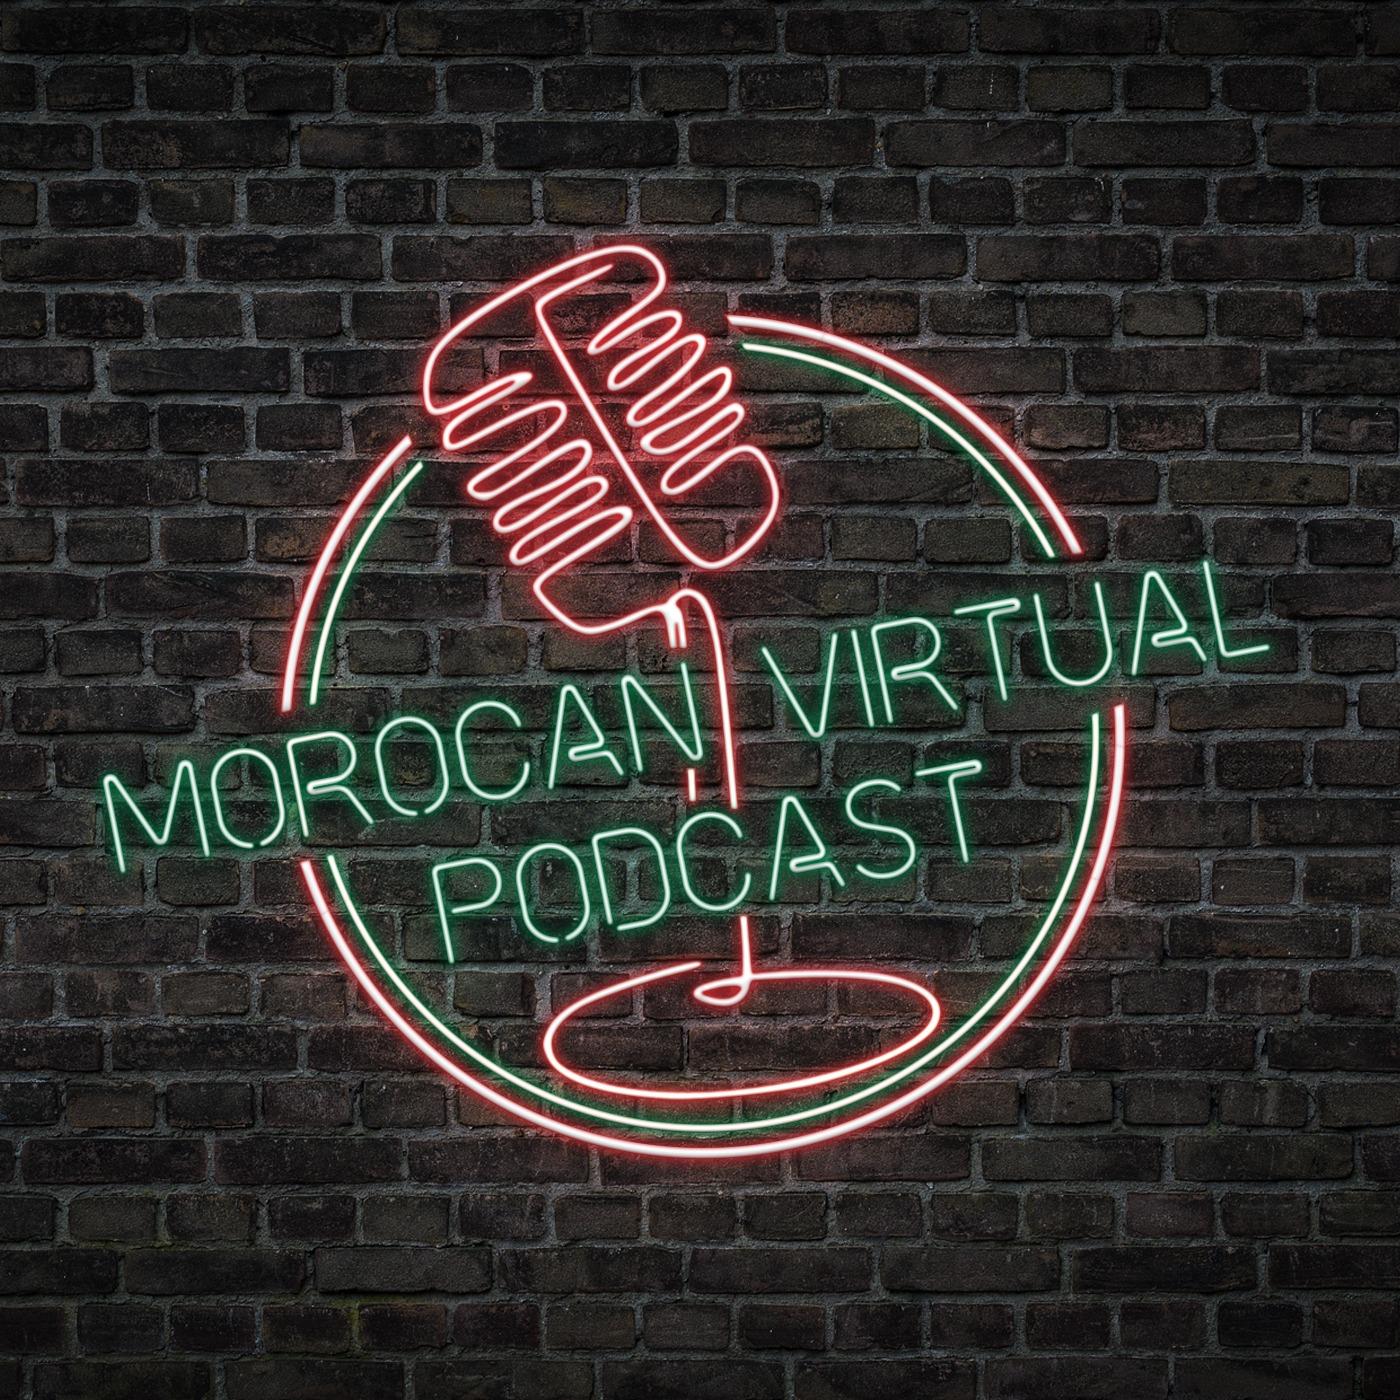 The Moroccan Virtual Podcast